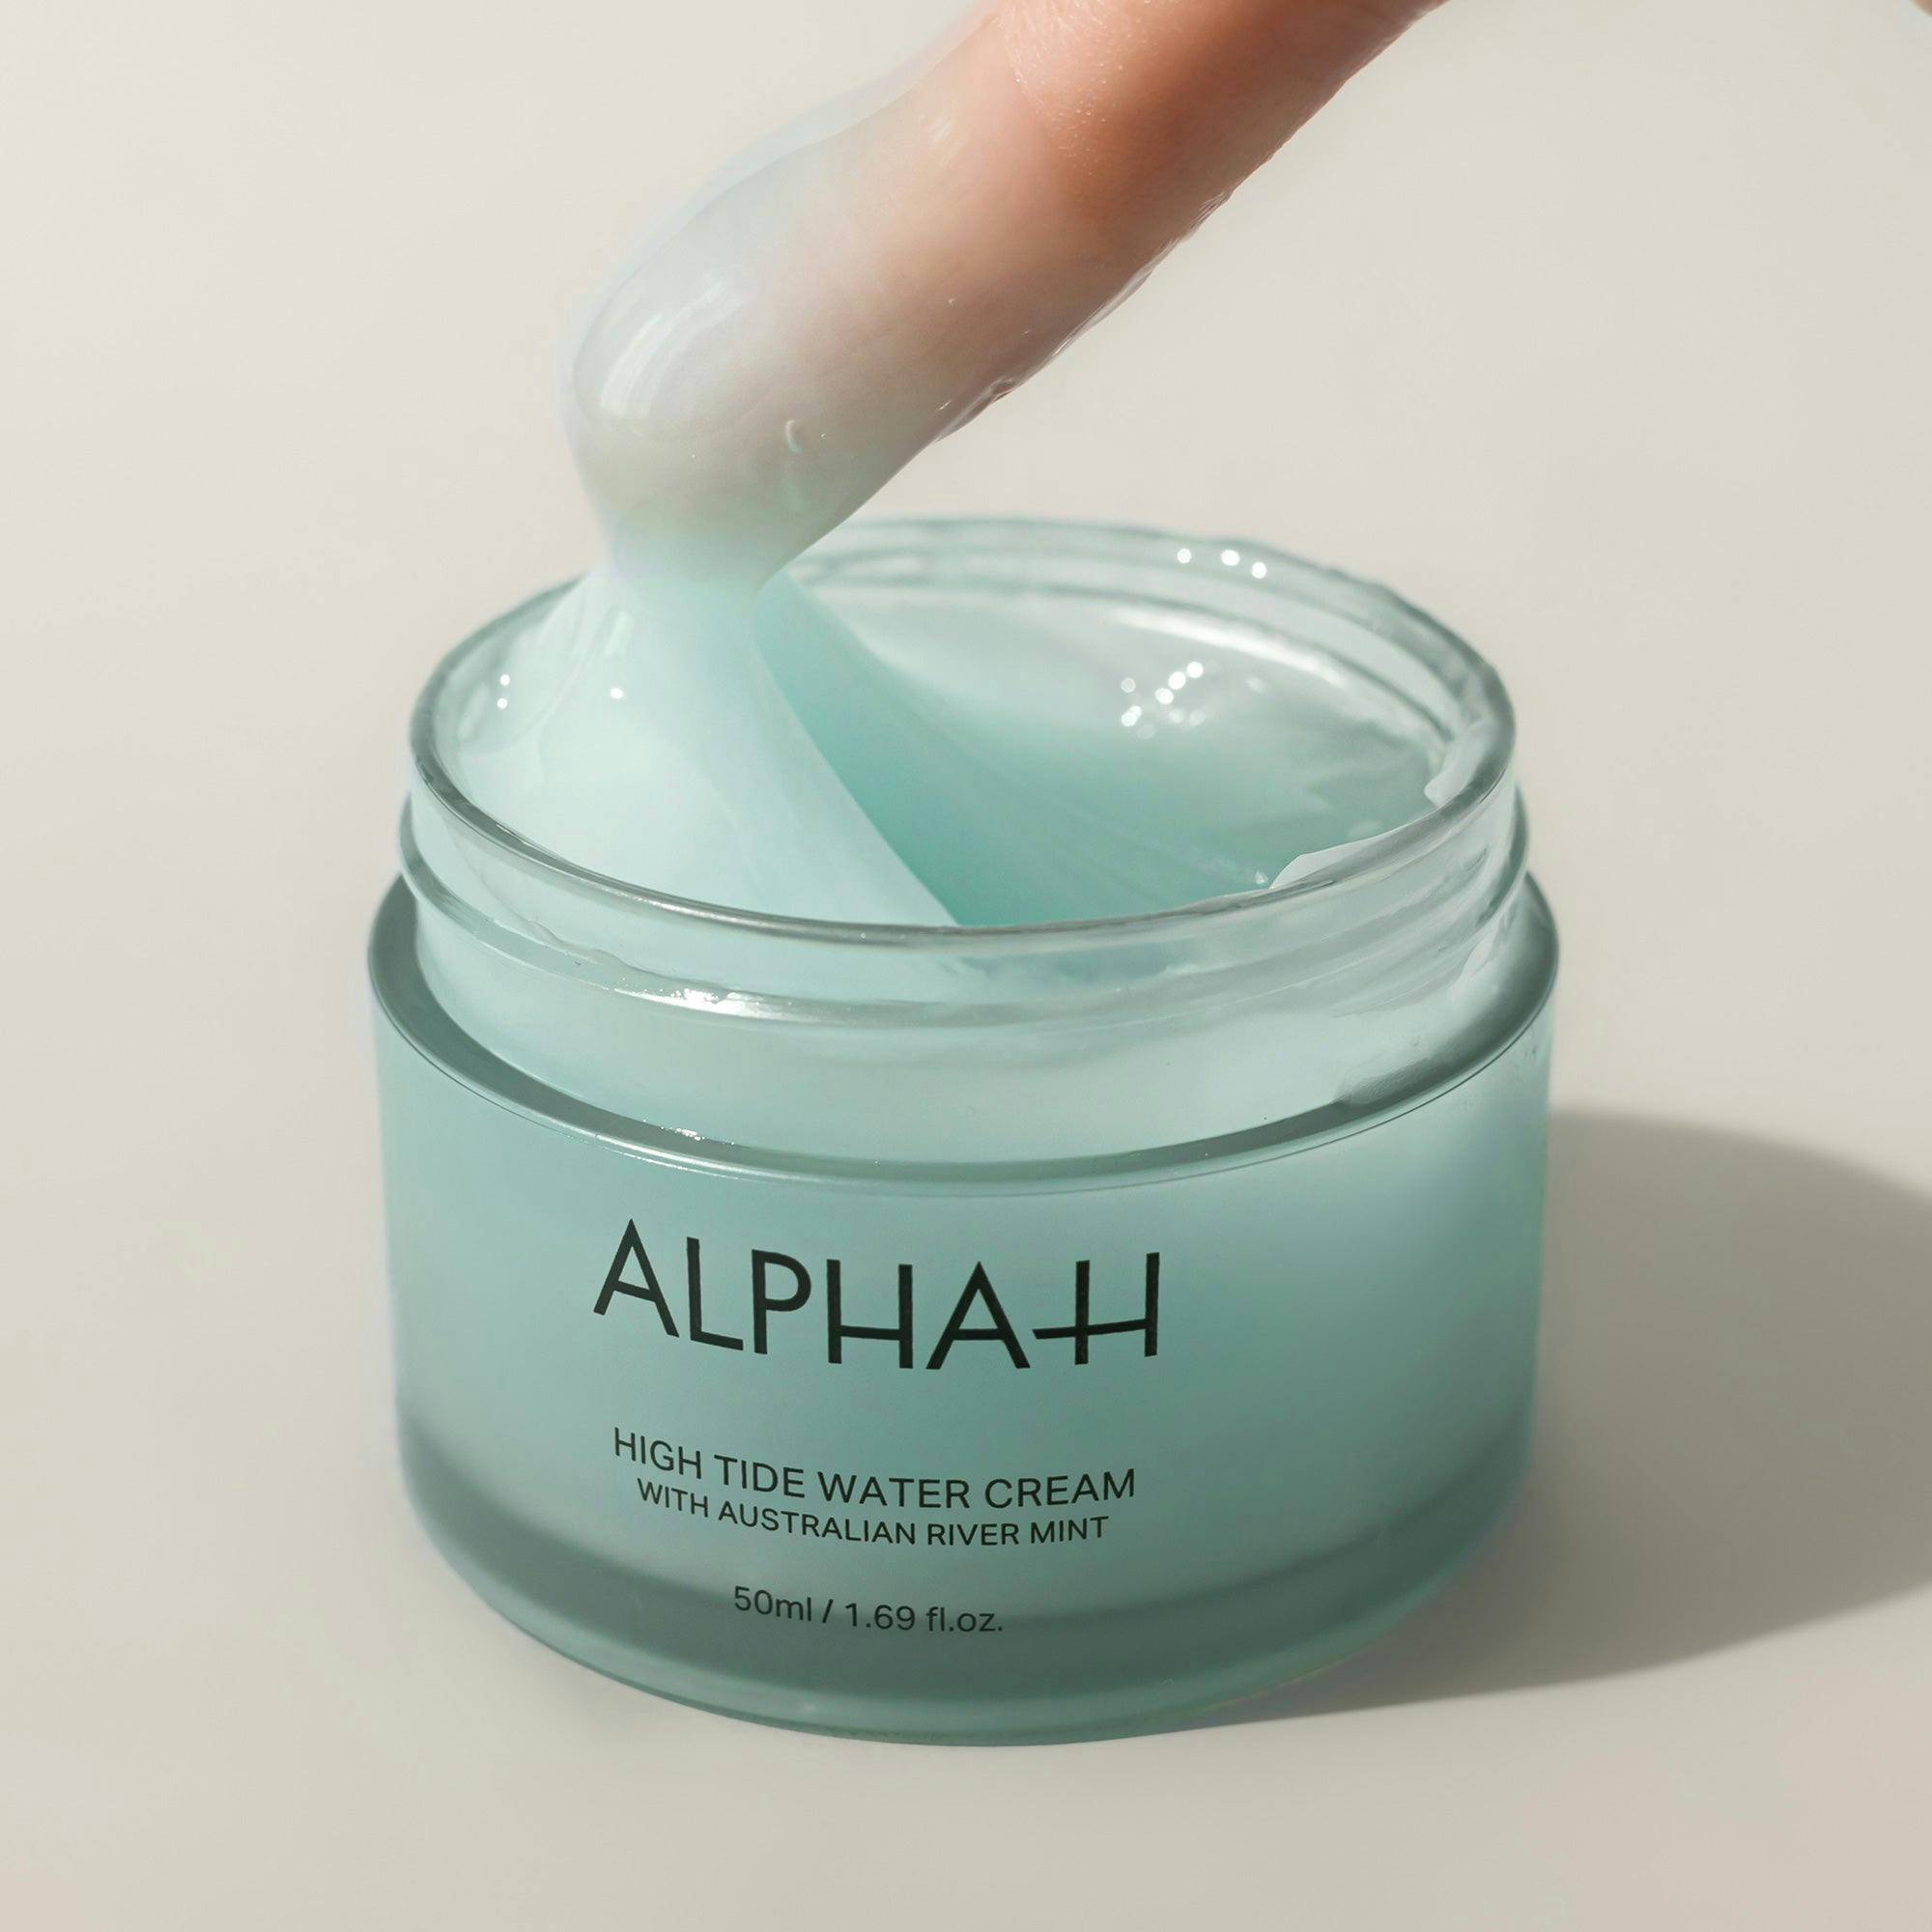 Alpha-H High Tide Water Cream with Australian River Mint 50ml